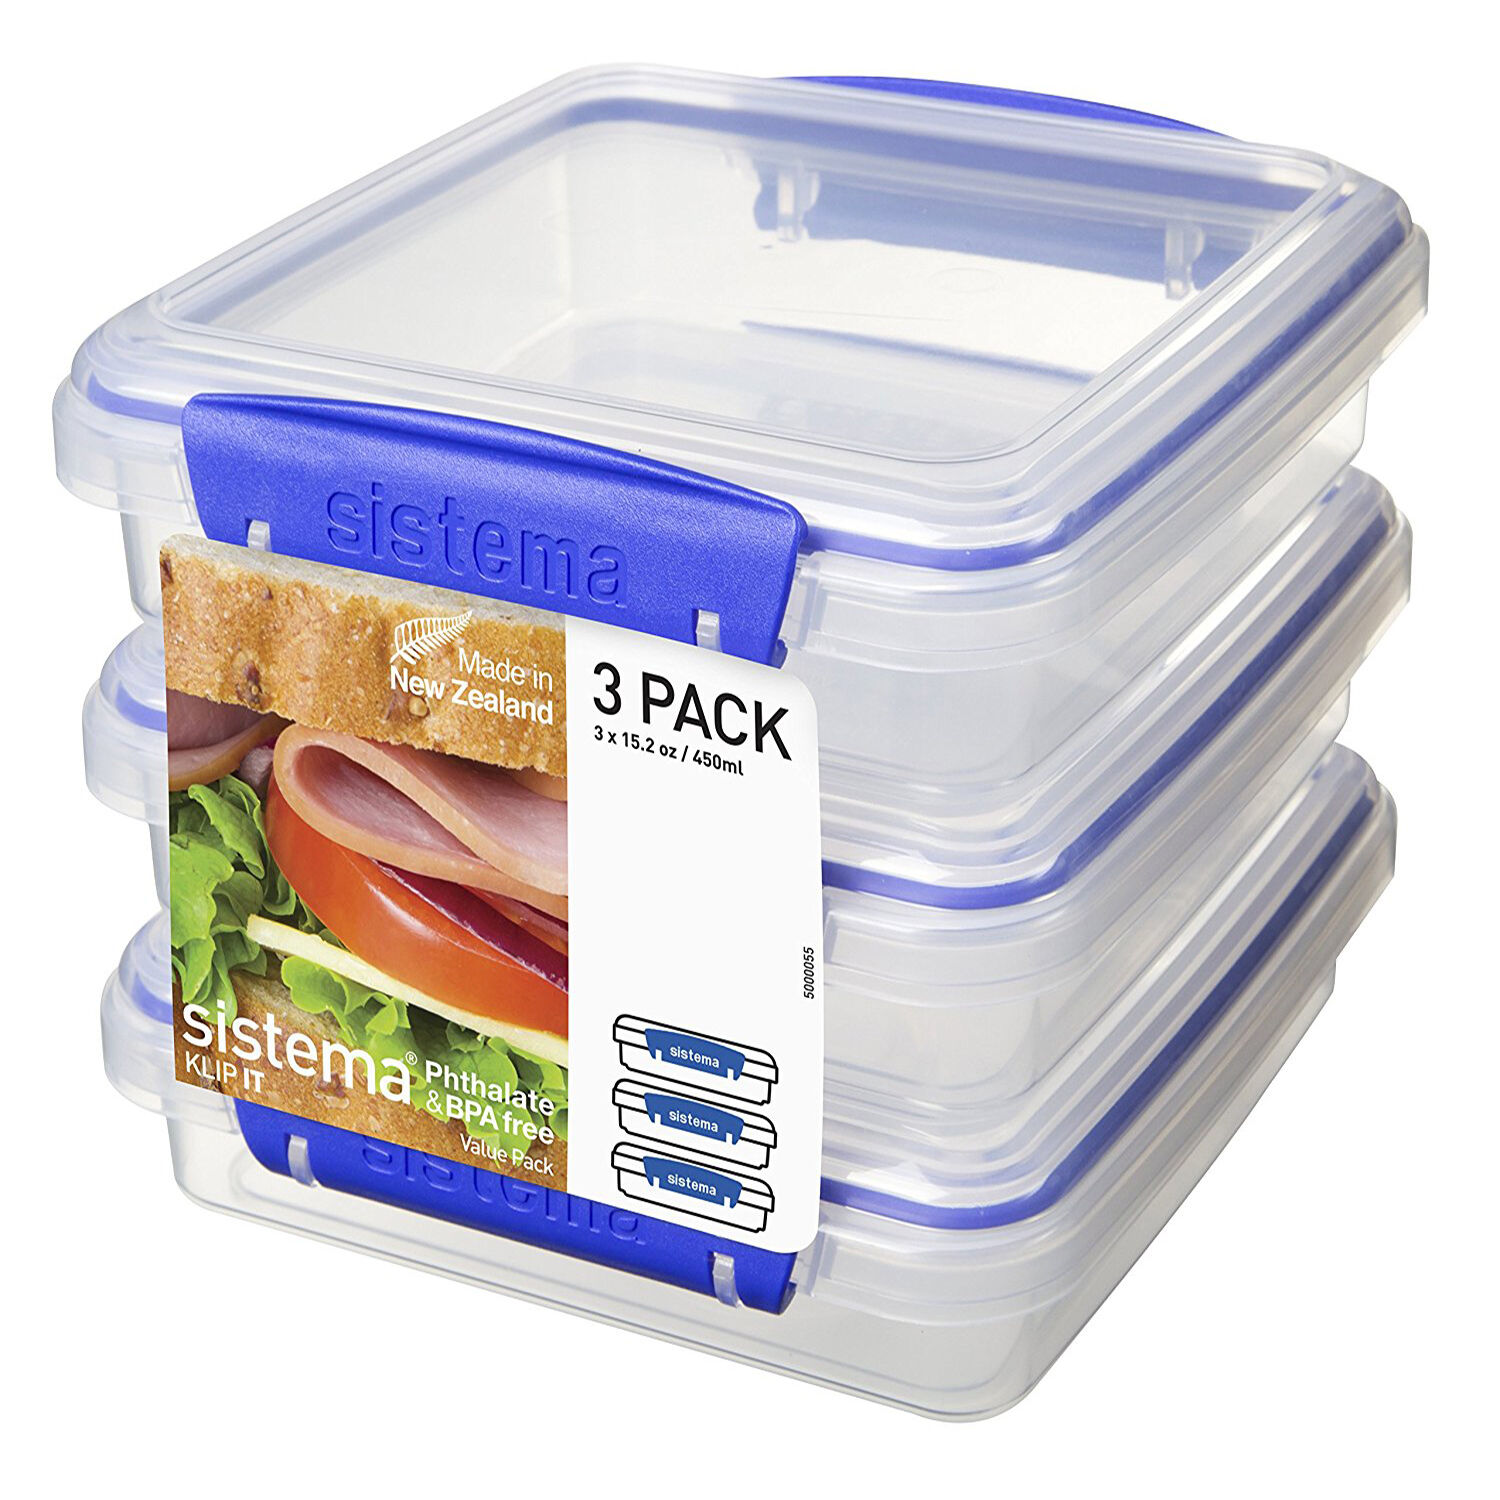 https://www.homestoreandmore.co.uk/dw/image/v2/BCBN_PRD/on/demandware.static/-/Sites-master/default/dw710d3430/images/Sistema-Airtight-Sandwich-Lunch-Boxes-3-Pack-lunch-boxes-048648-hi-res-0.jpg?sw=1500